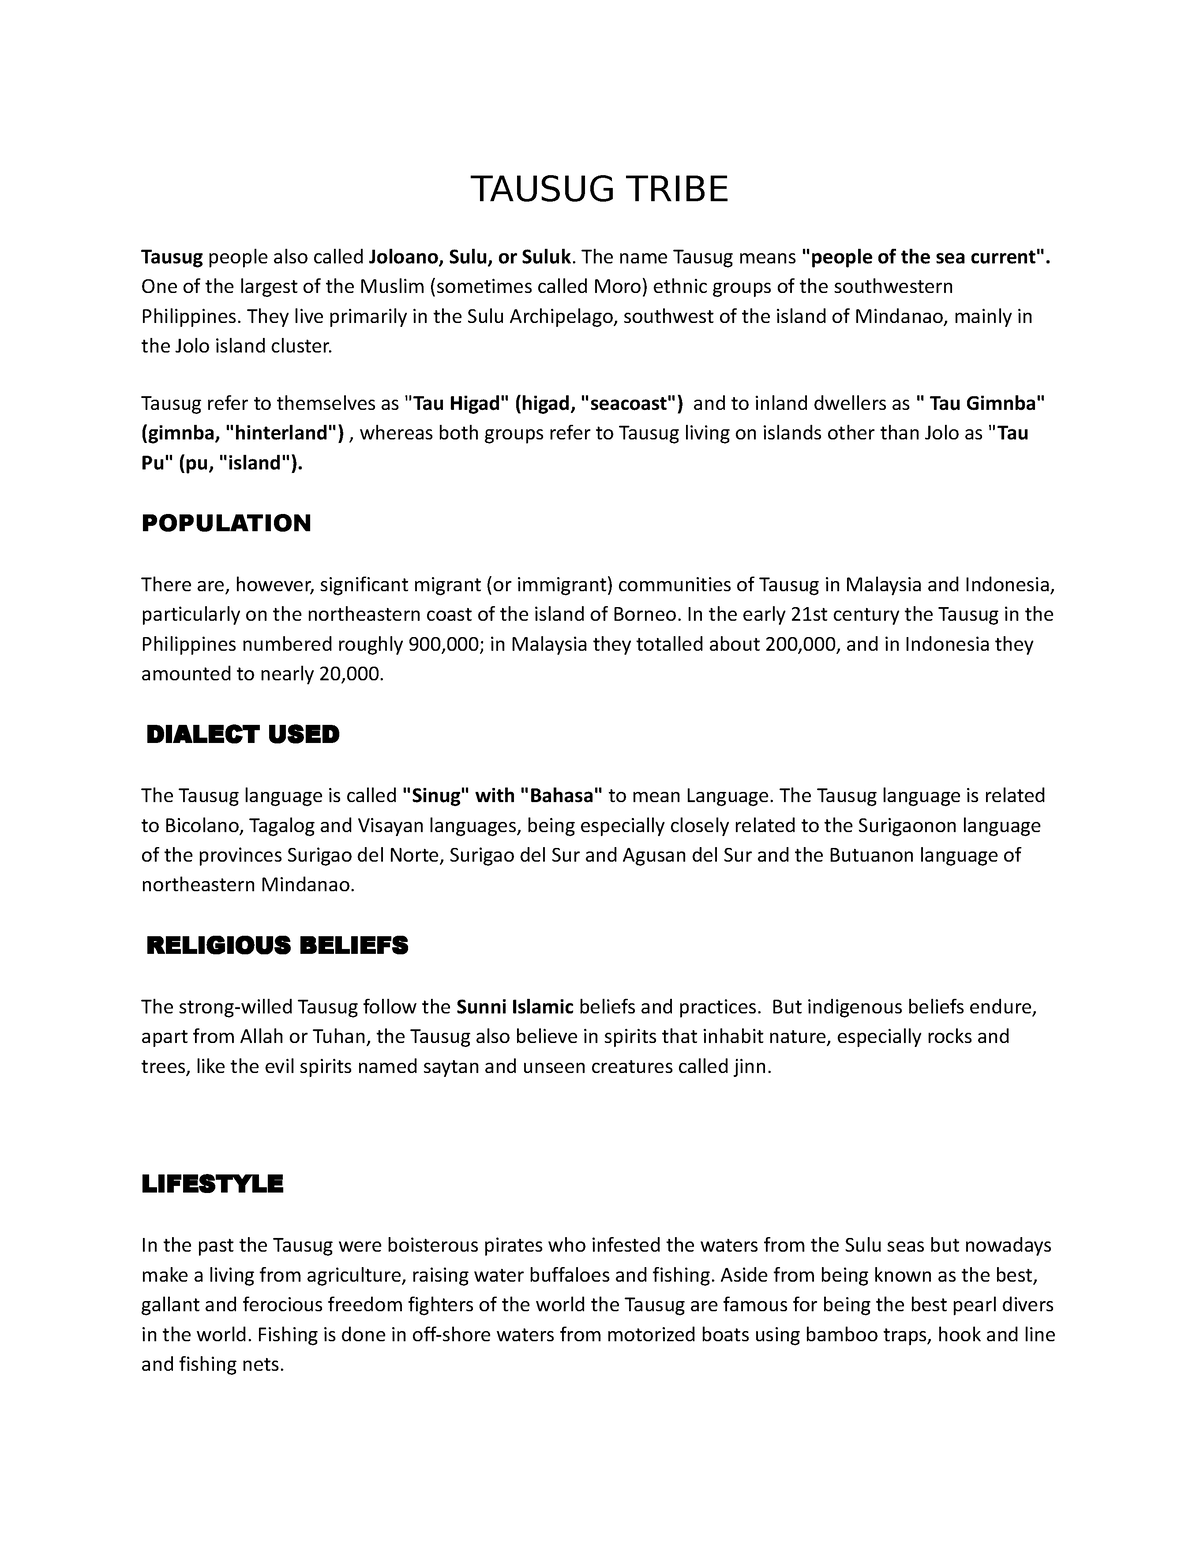 Tausug Tribe - lecture notes - TAUSUG TRIBE Tausug people also called ...